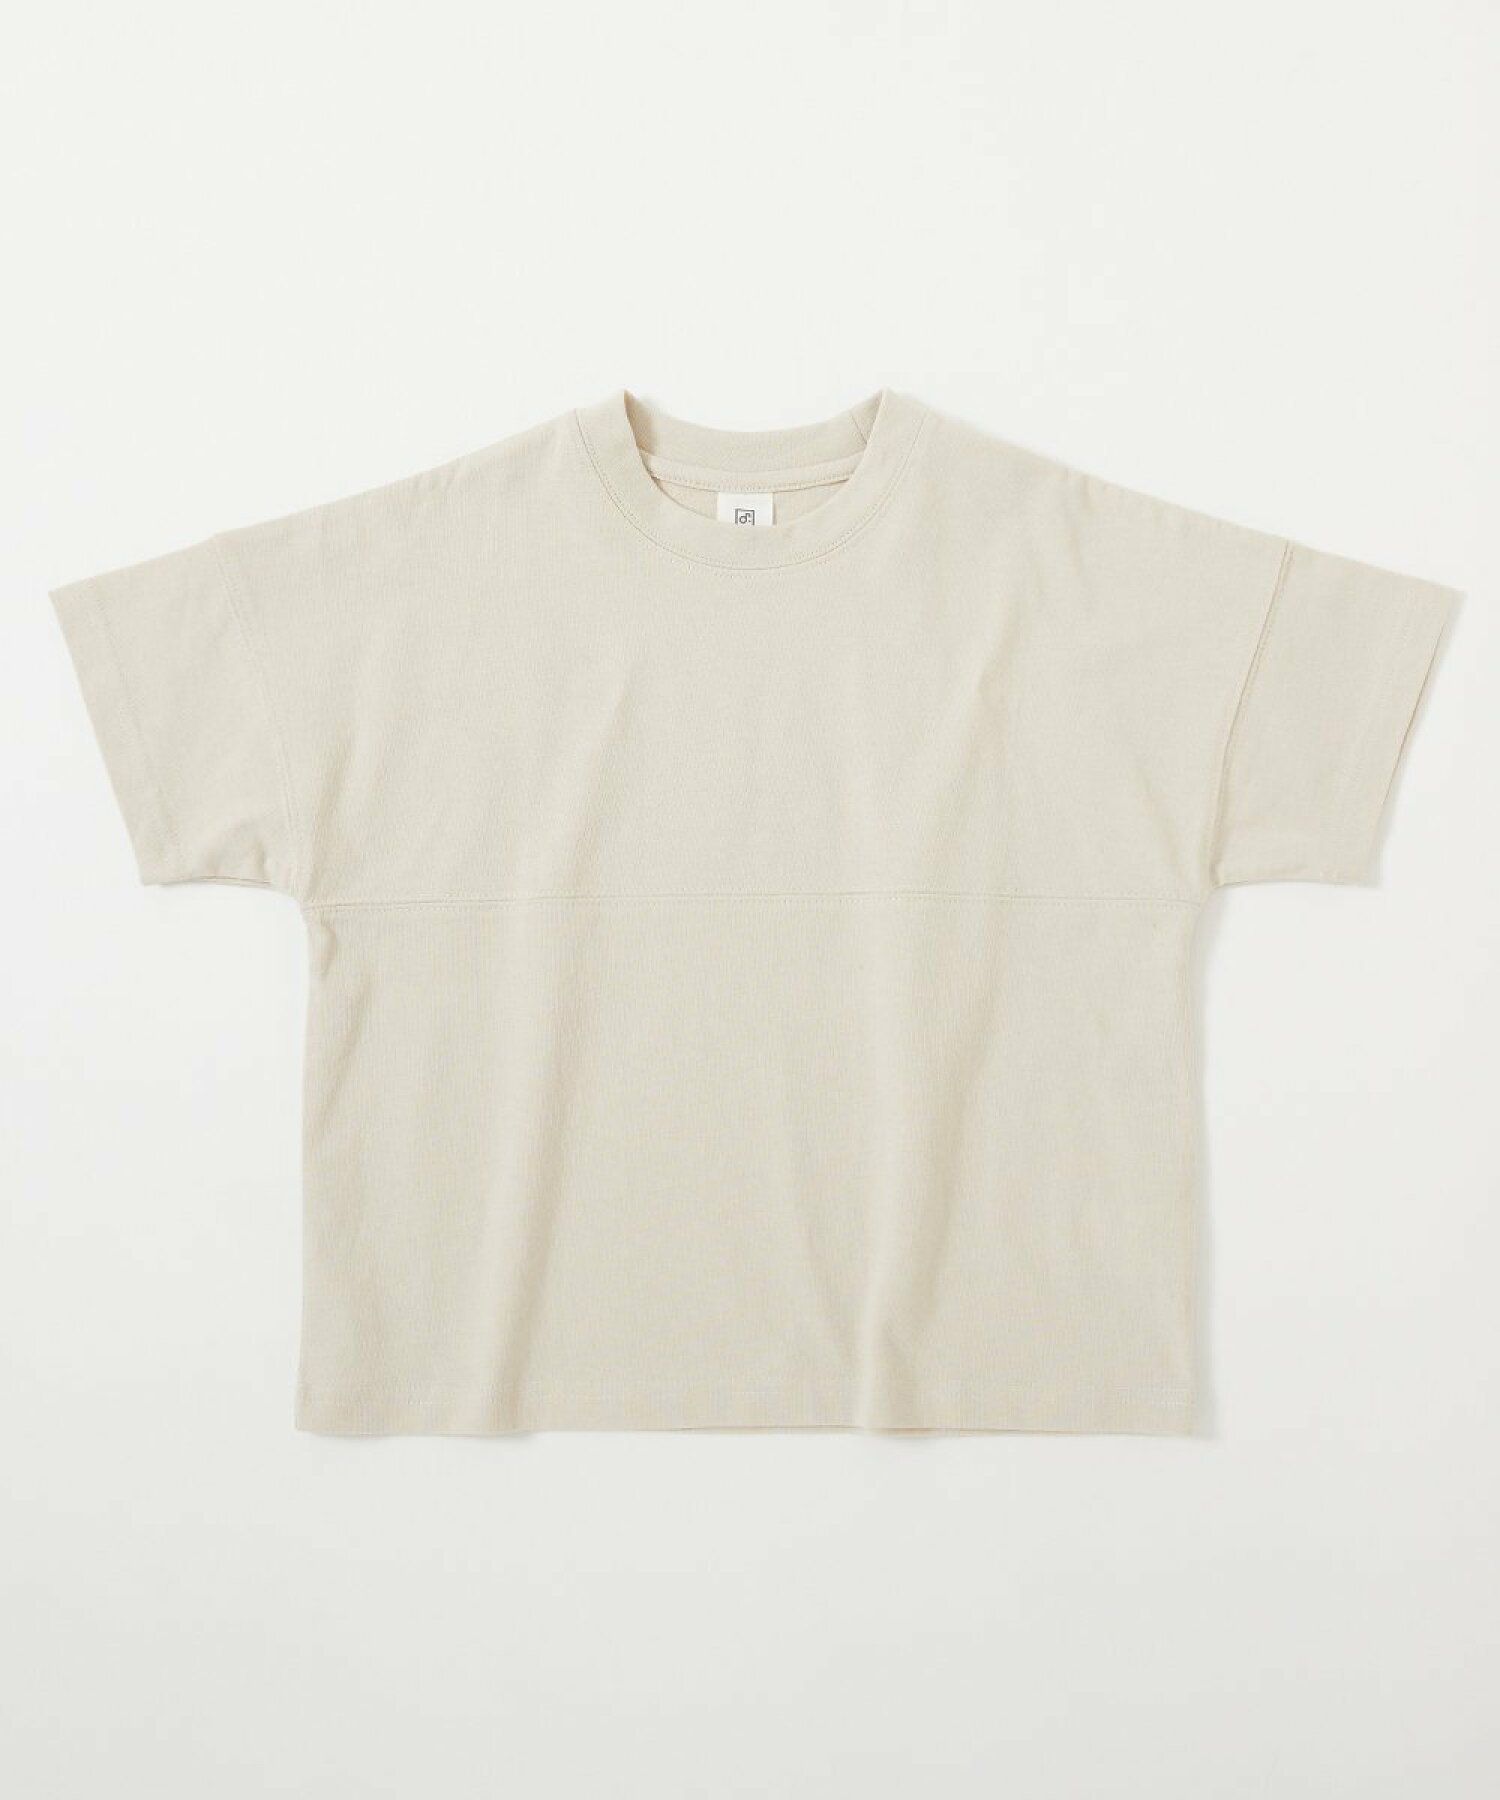 STANDARD バックロゴプリント 半袖Tシャツ トップス 半袖Tシャツ Tシャツ